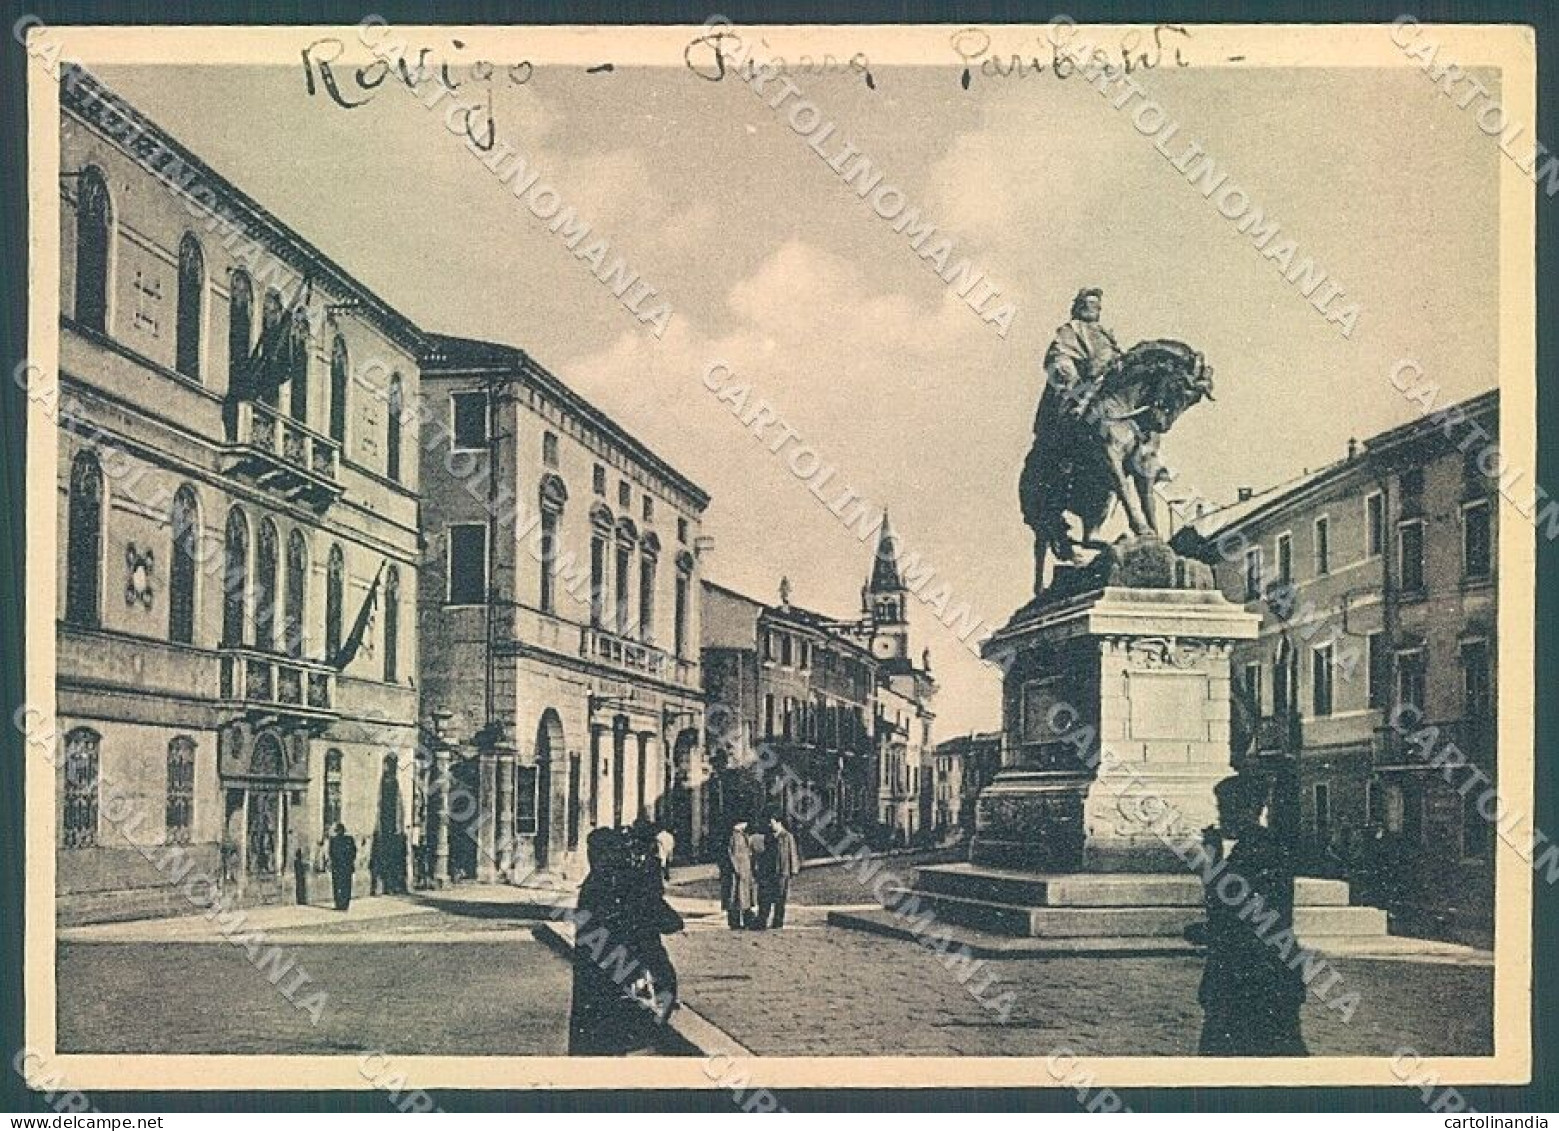 Rovigo Città Piazza Monumento Garibaldi FG Cartolina JK3444 - Rovigo